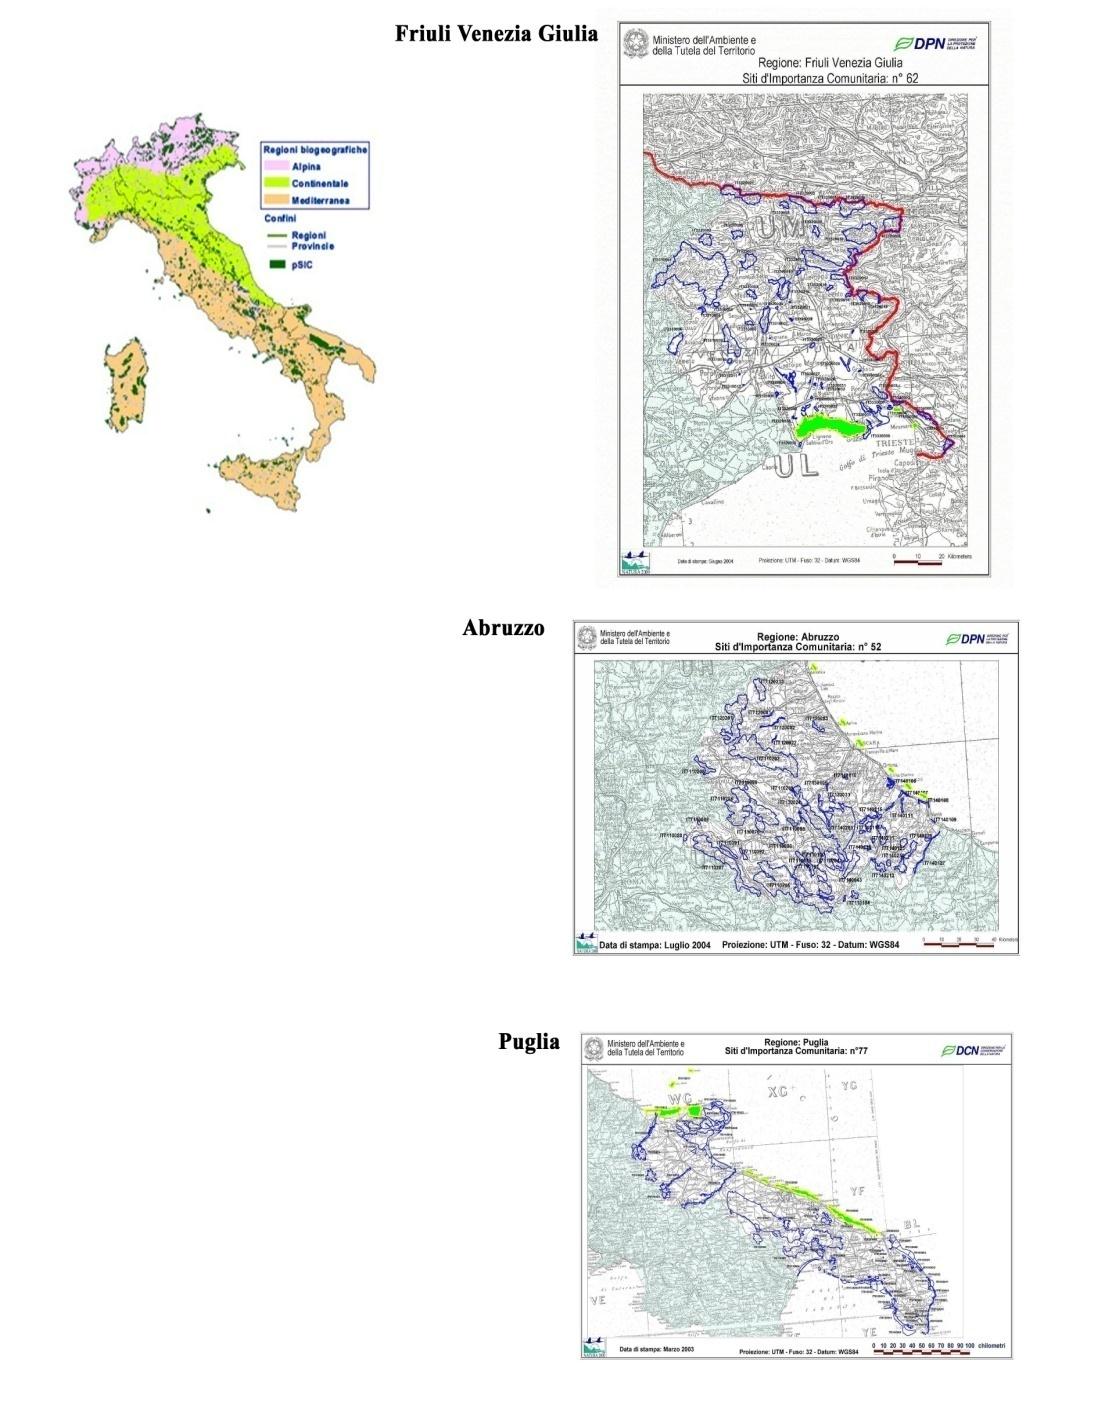 Aree di interesse Friuli Venezia Giulia (SIC): -Laguna di Marano e Grado -Falesie di Duino -Riserva Marina di Miramare Abruzzo: -Barriere sommerse Puglia (SIC):